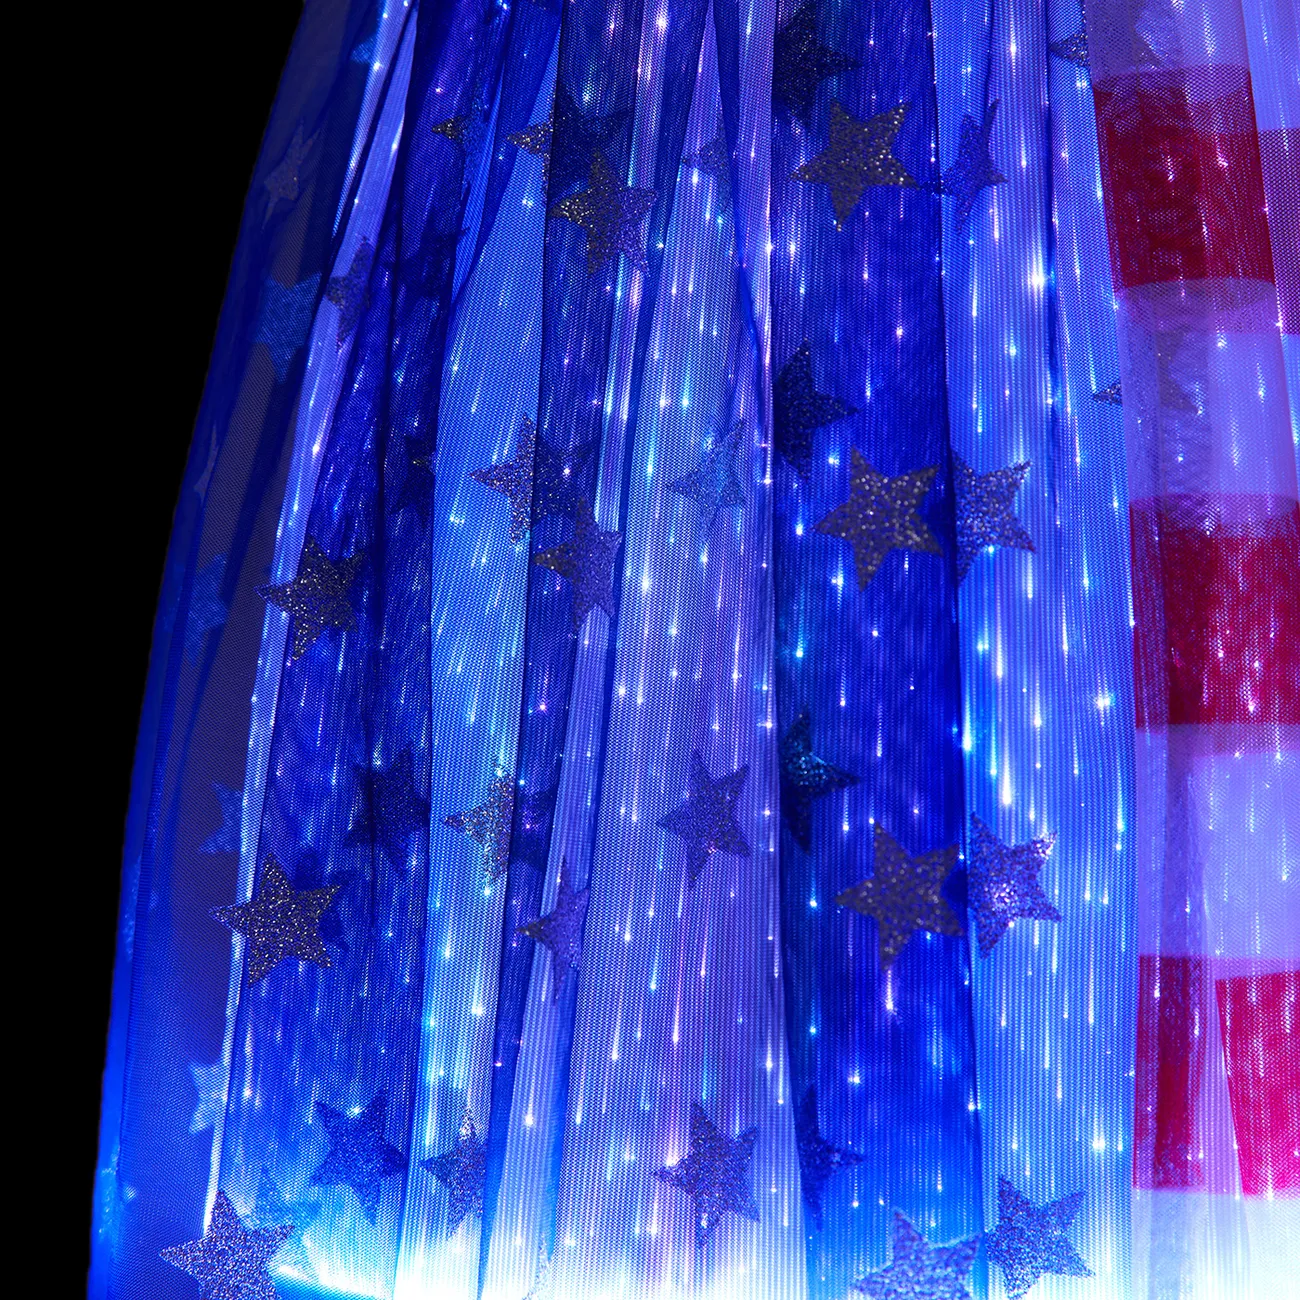 Go-Glow Illuminating Denim Dress with Light Up Contrast Skirt Including Controller (Battery Inside) Dark blue/White/Red big image 1